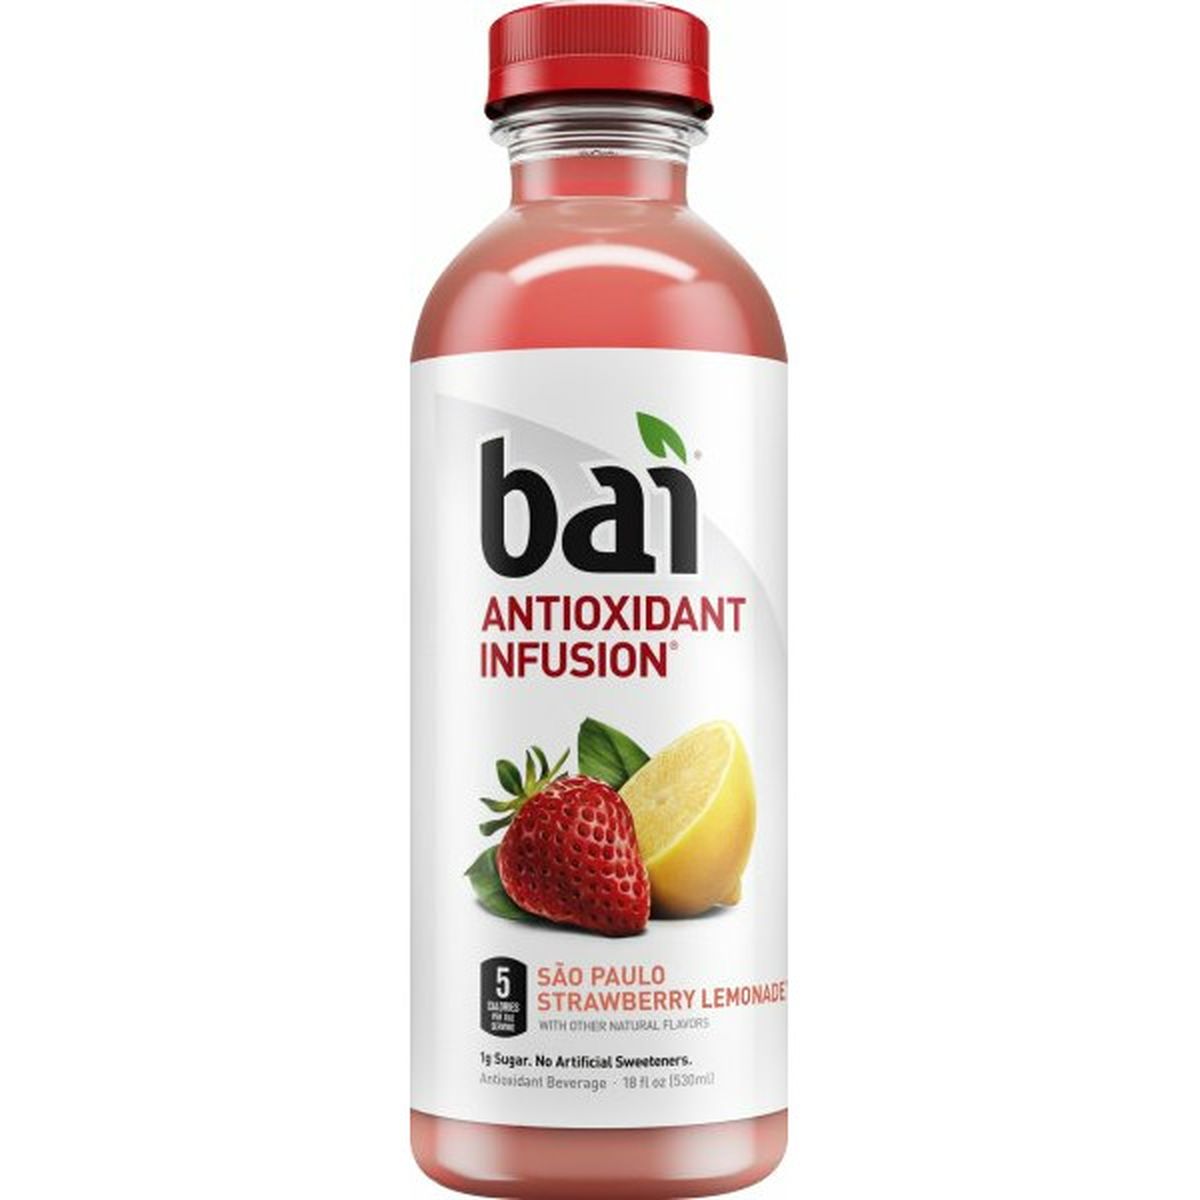 Calories in Bai Sao Paulo Strawberry Lemonade, Antioxidant Infused Beverage Antioxidant Beverage, Sao Paulo Strawberry Lemonade